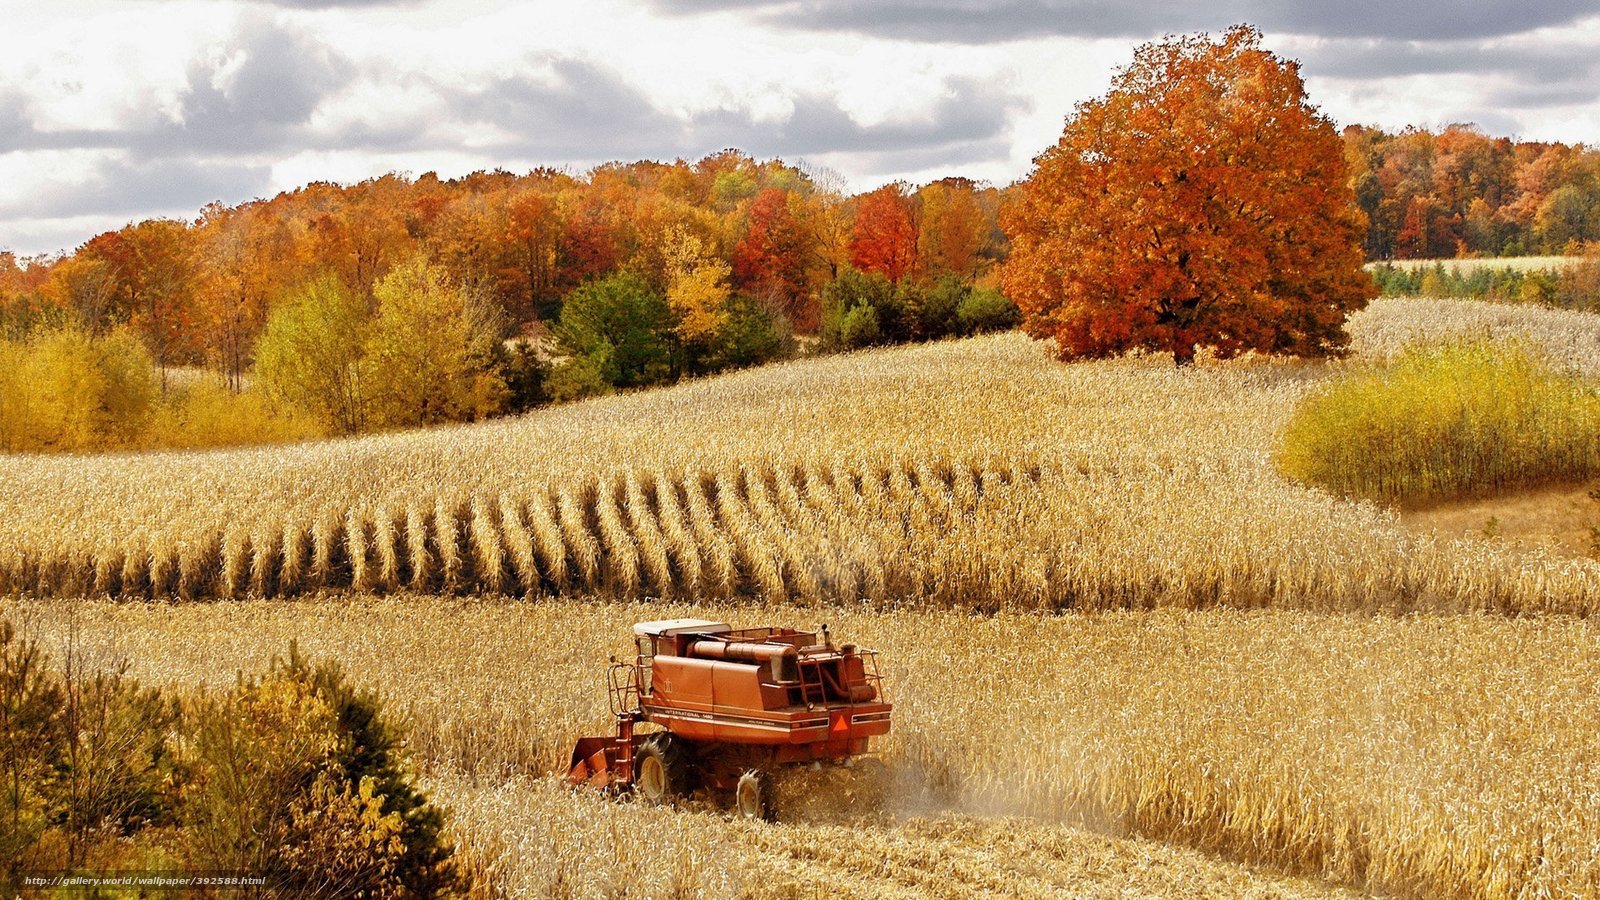 Wallpaper Autumn Field Harvest Desktop In